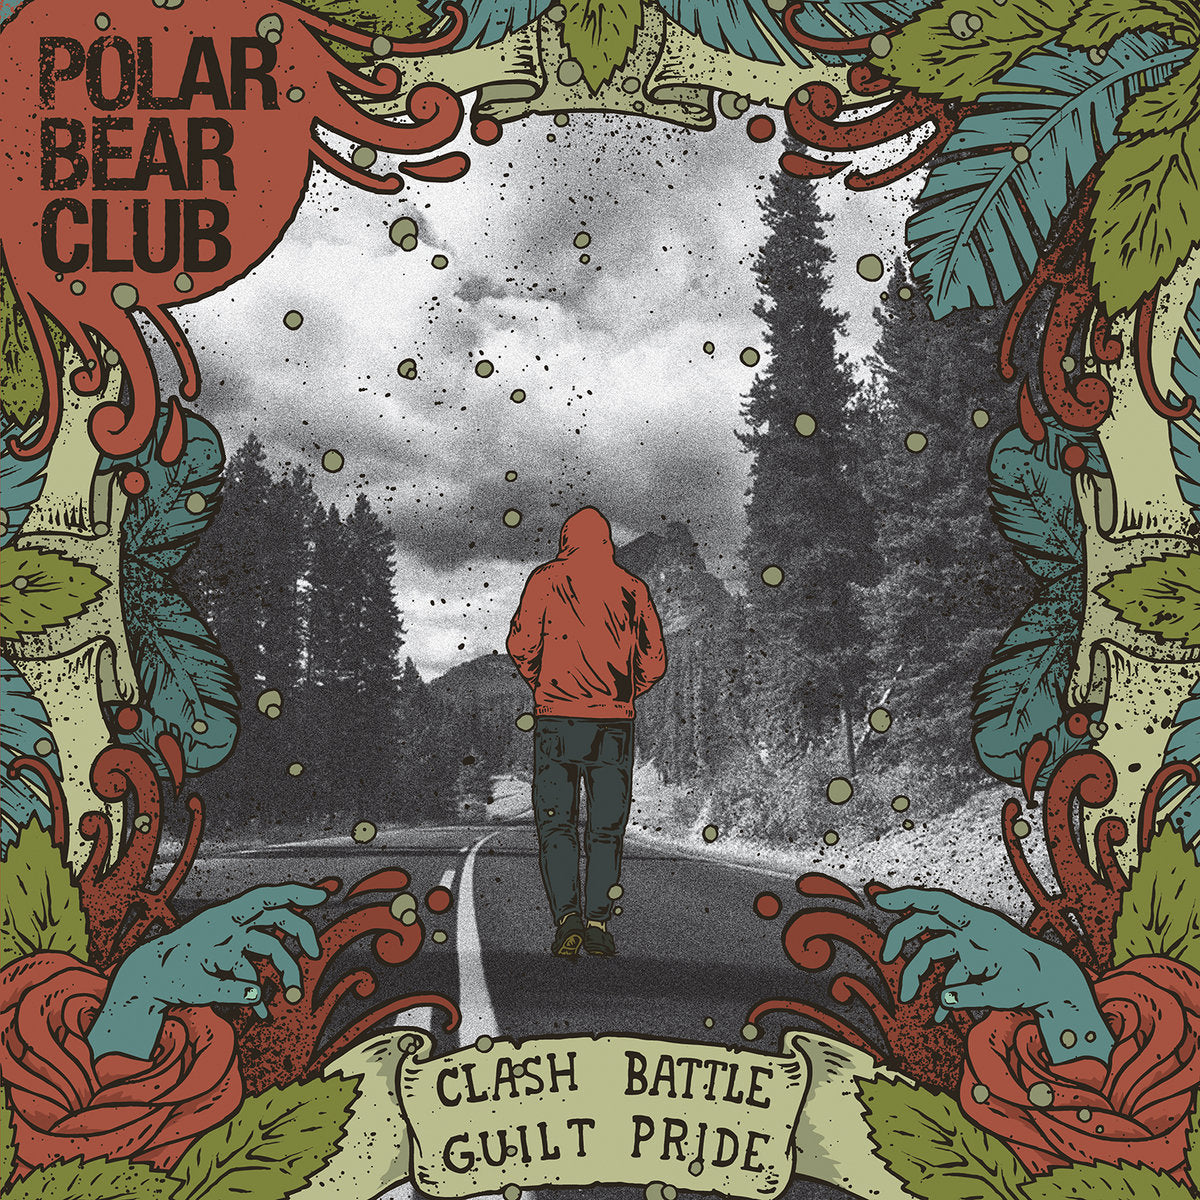 Polar Bear Club "Clash Battle Guilt Pride" CD